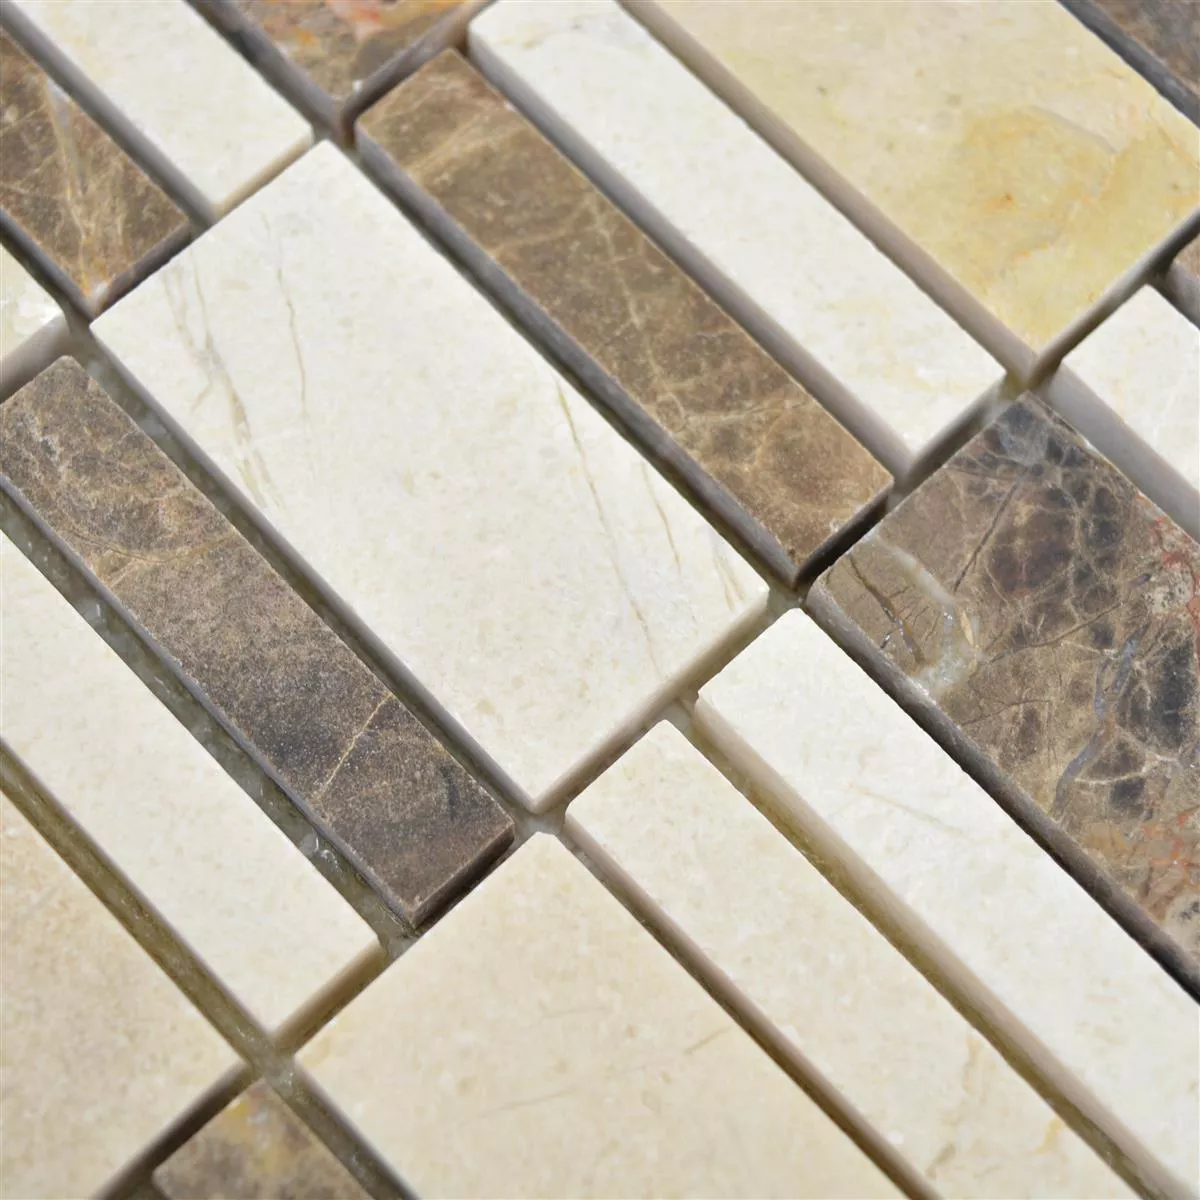 Marble Mosaic Tiles Sunbury Natural Stone Brown Caramel